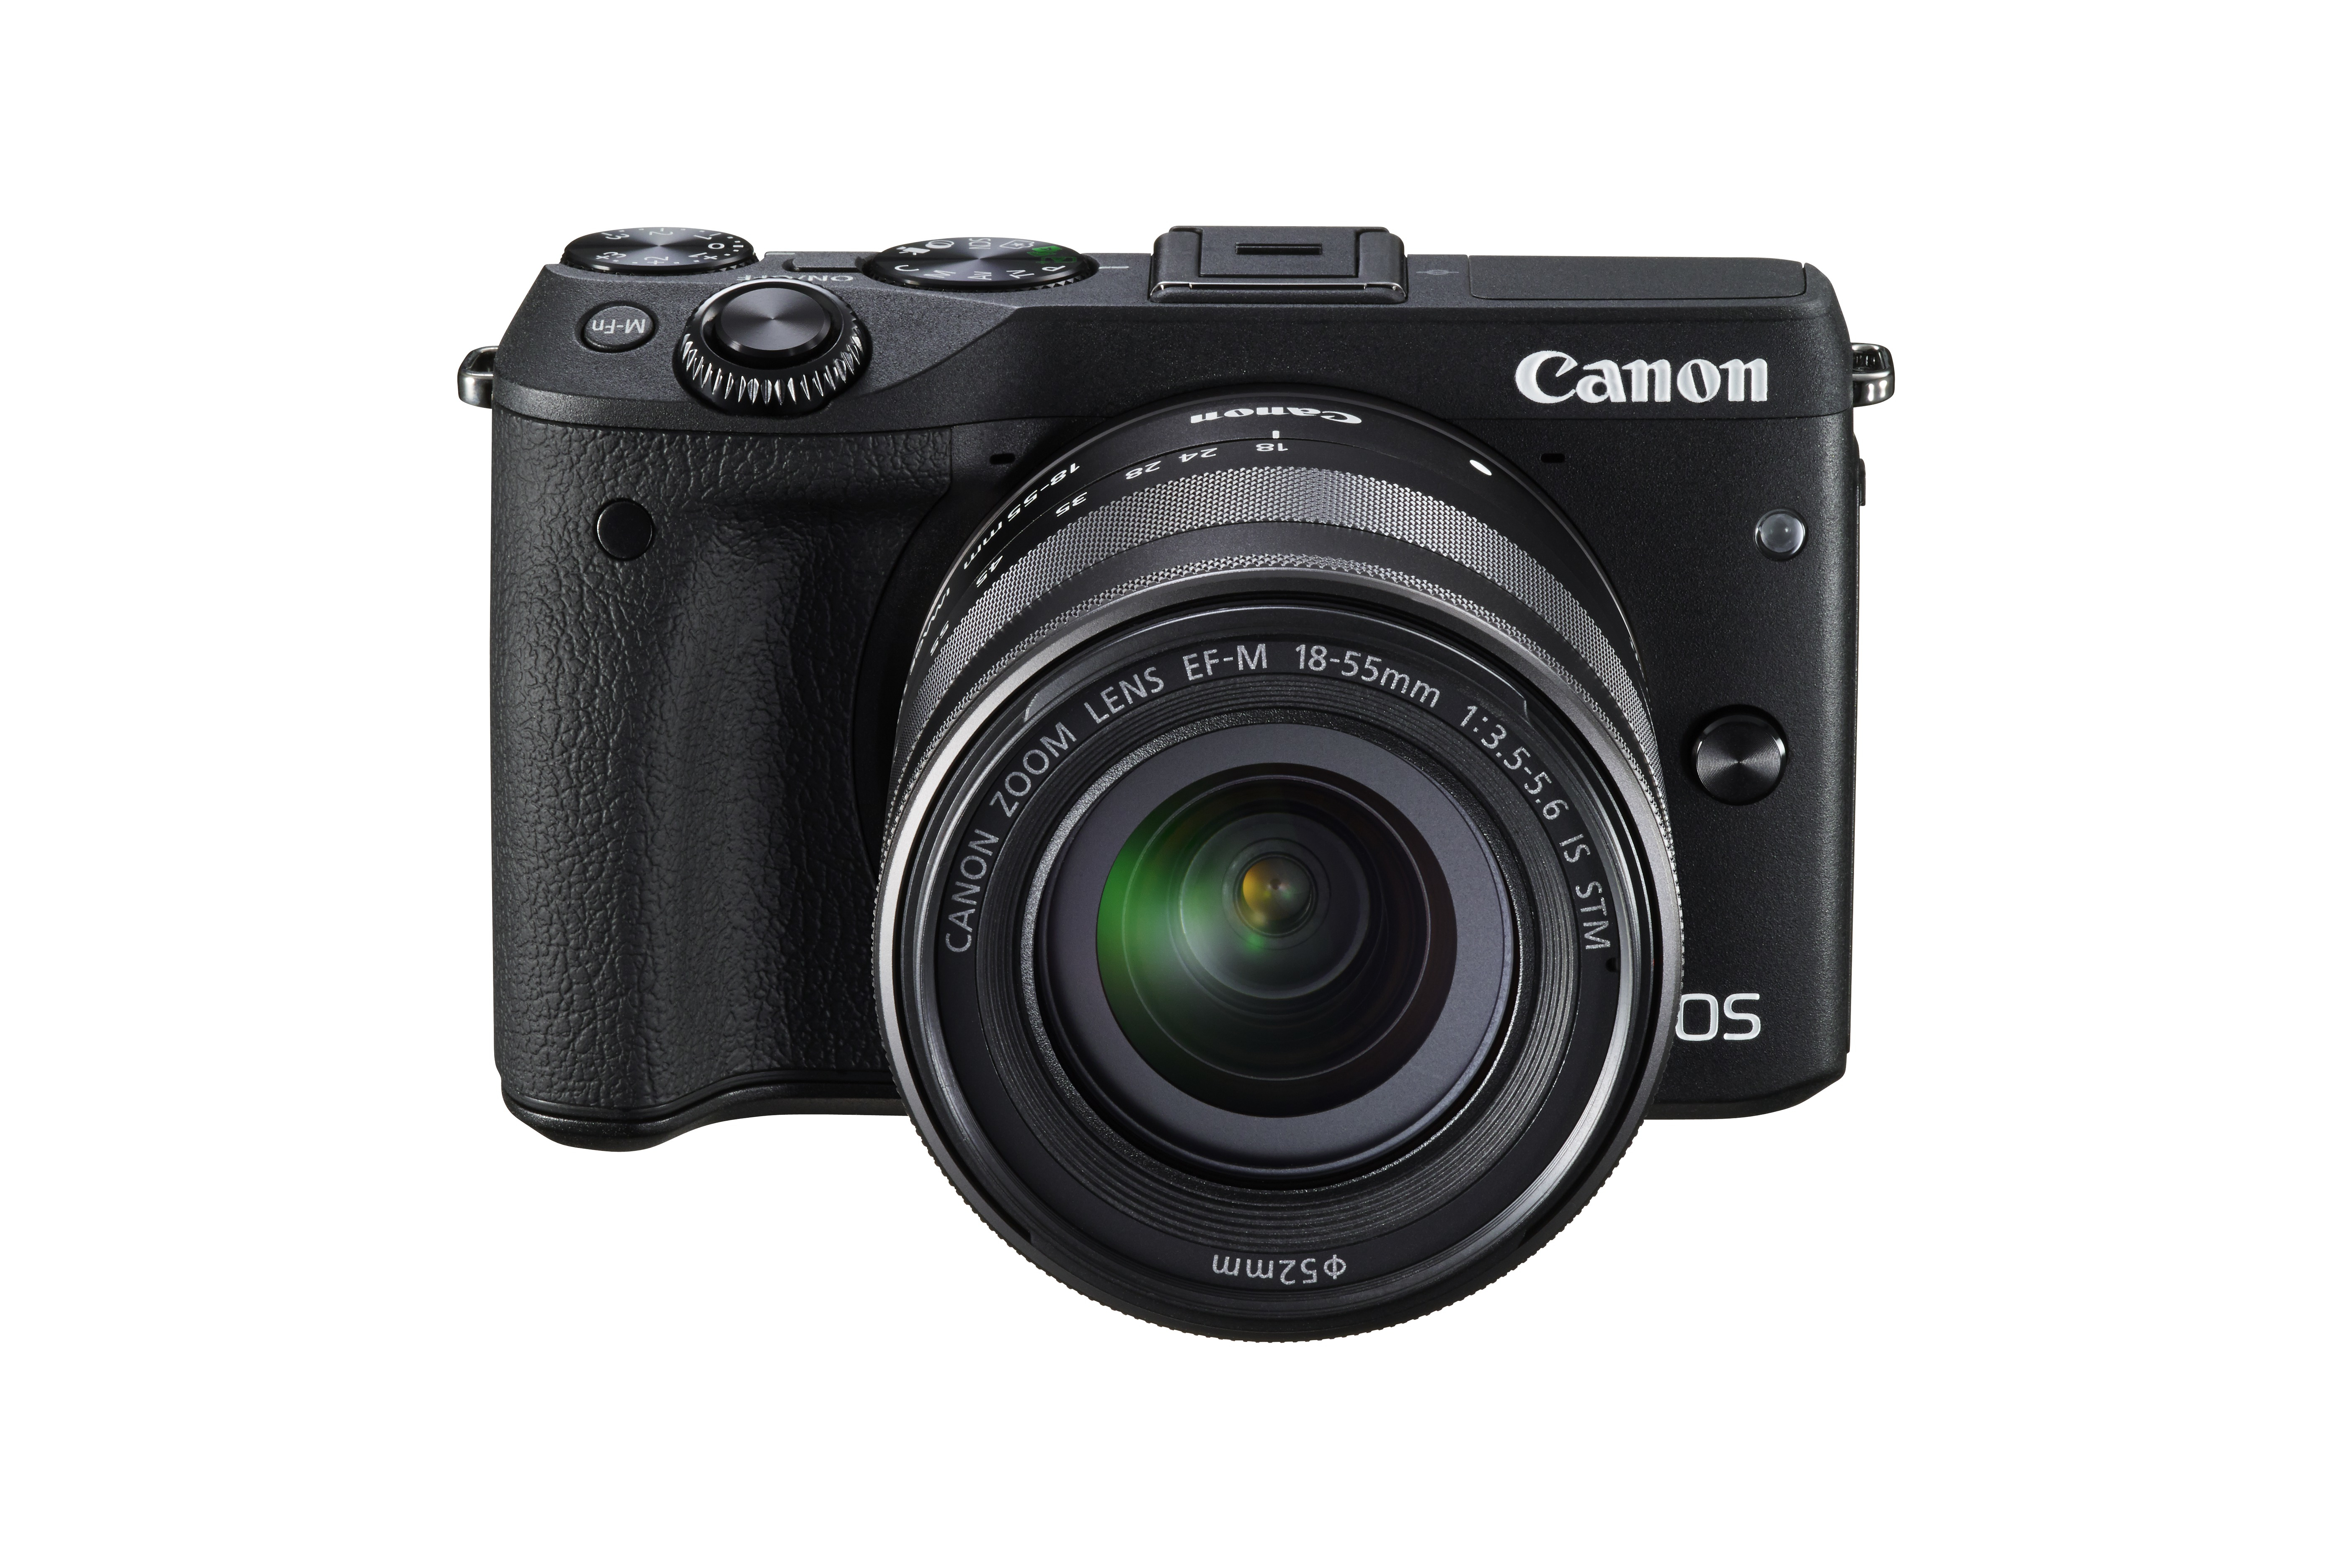 Canon EOS M3 - Video Creator Kit - digital camera - mirrorless - 24.2 MP - APS-C - 1080p / 30 fps - 3x optical zoom EF-M 18-55mm IS STM lens - Wi-Fi, NFC - black